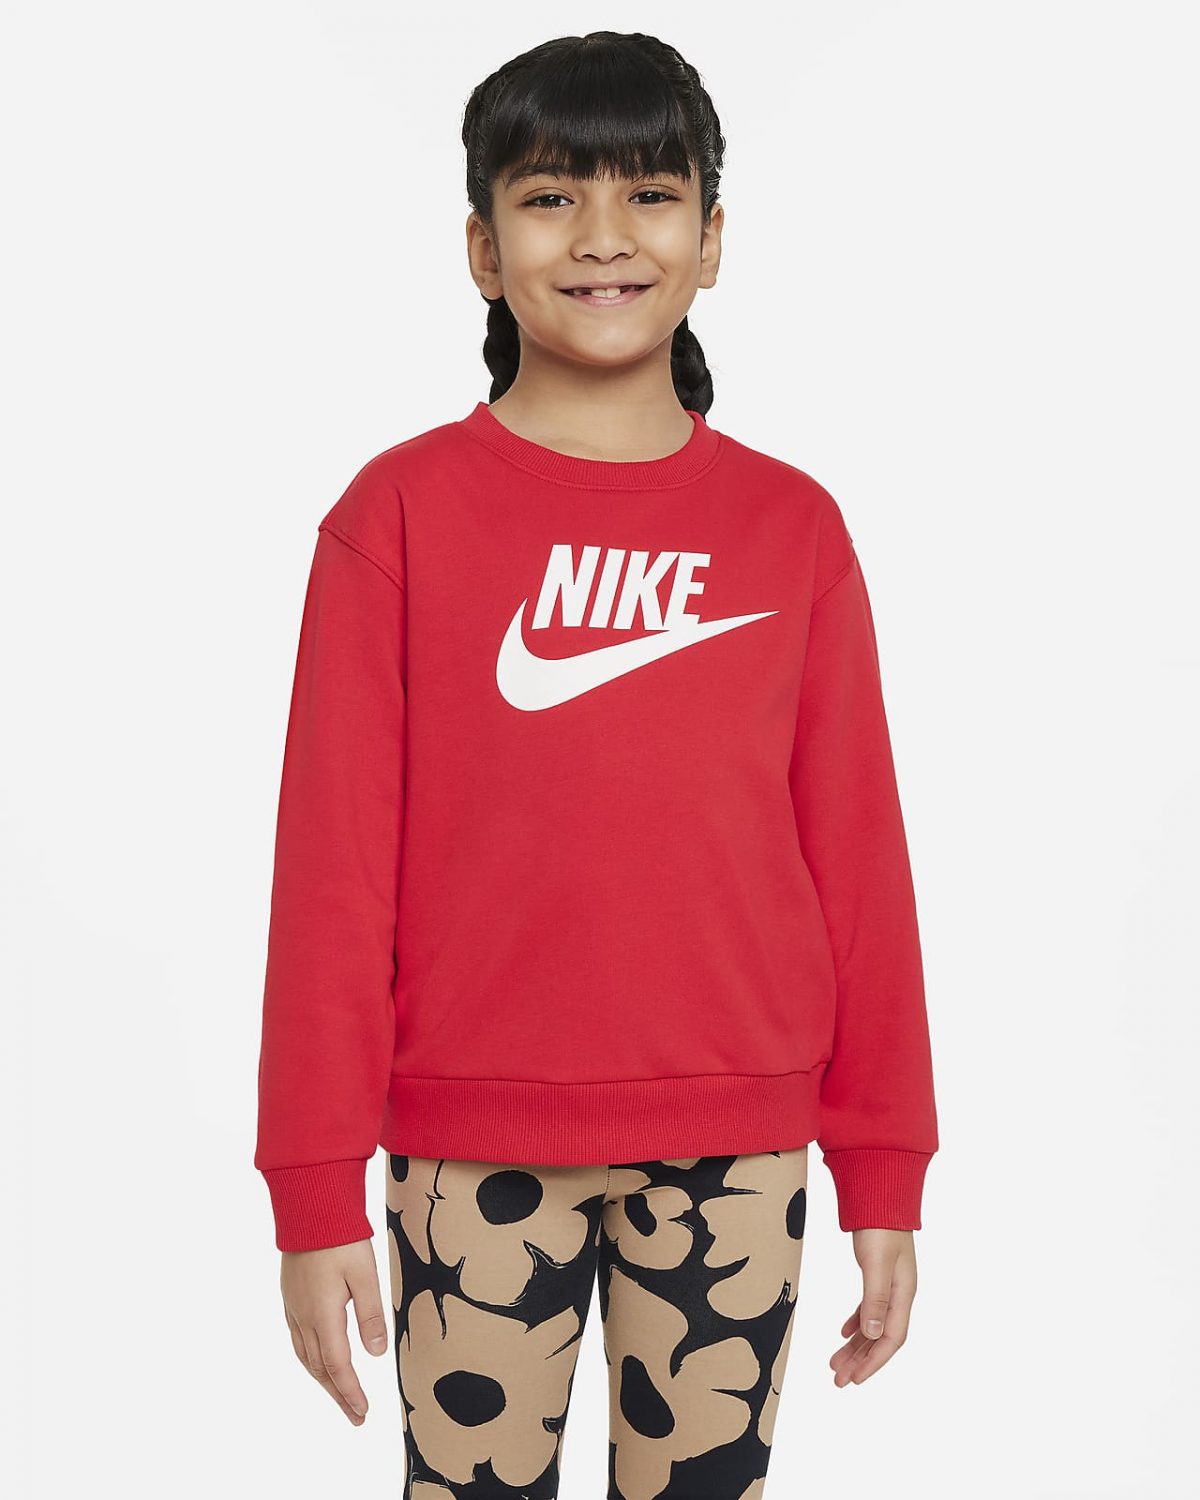 Детский топ Nike фото